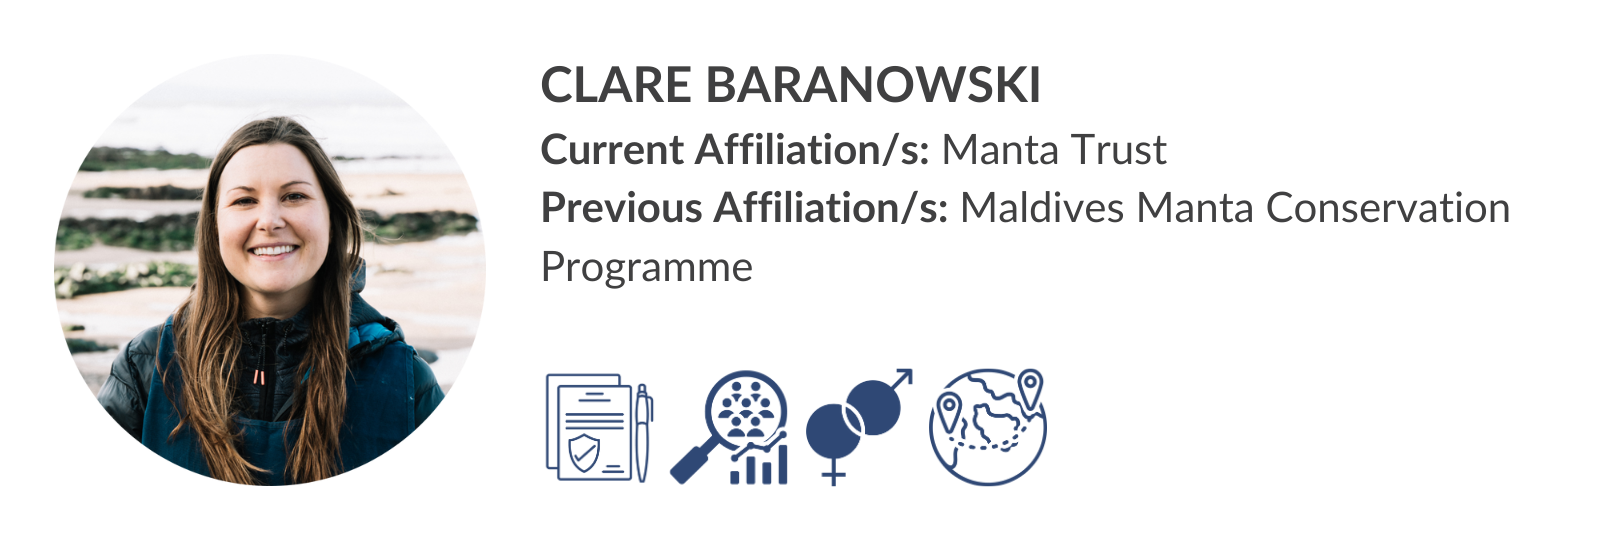 Clare Baranowski.png